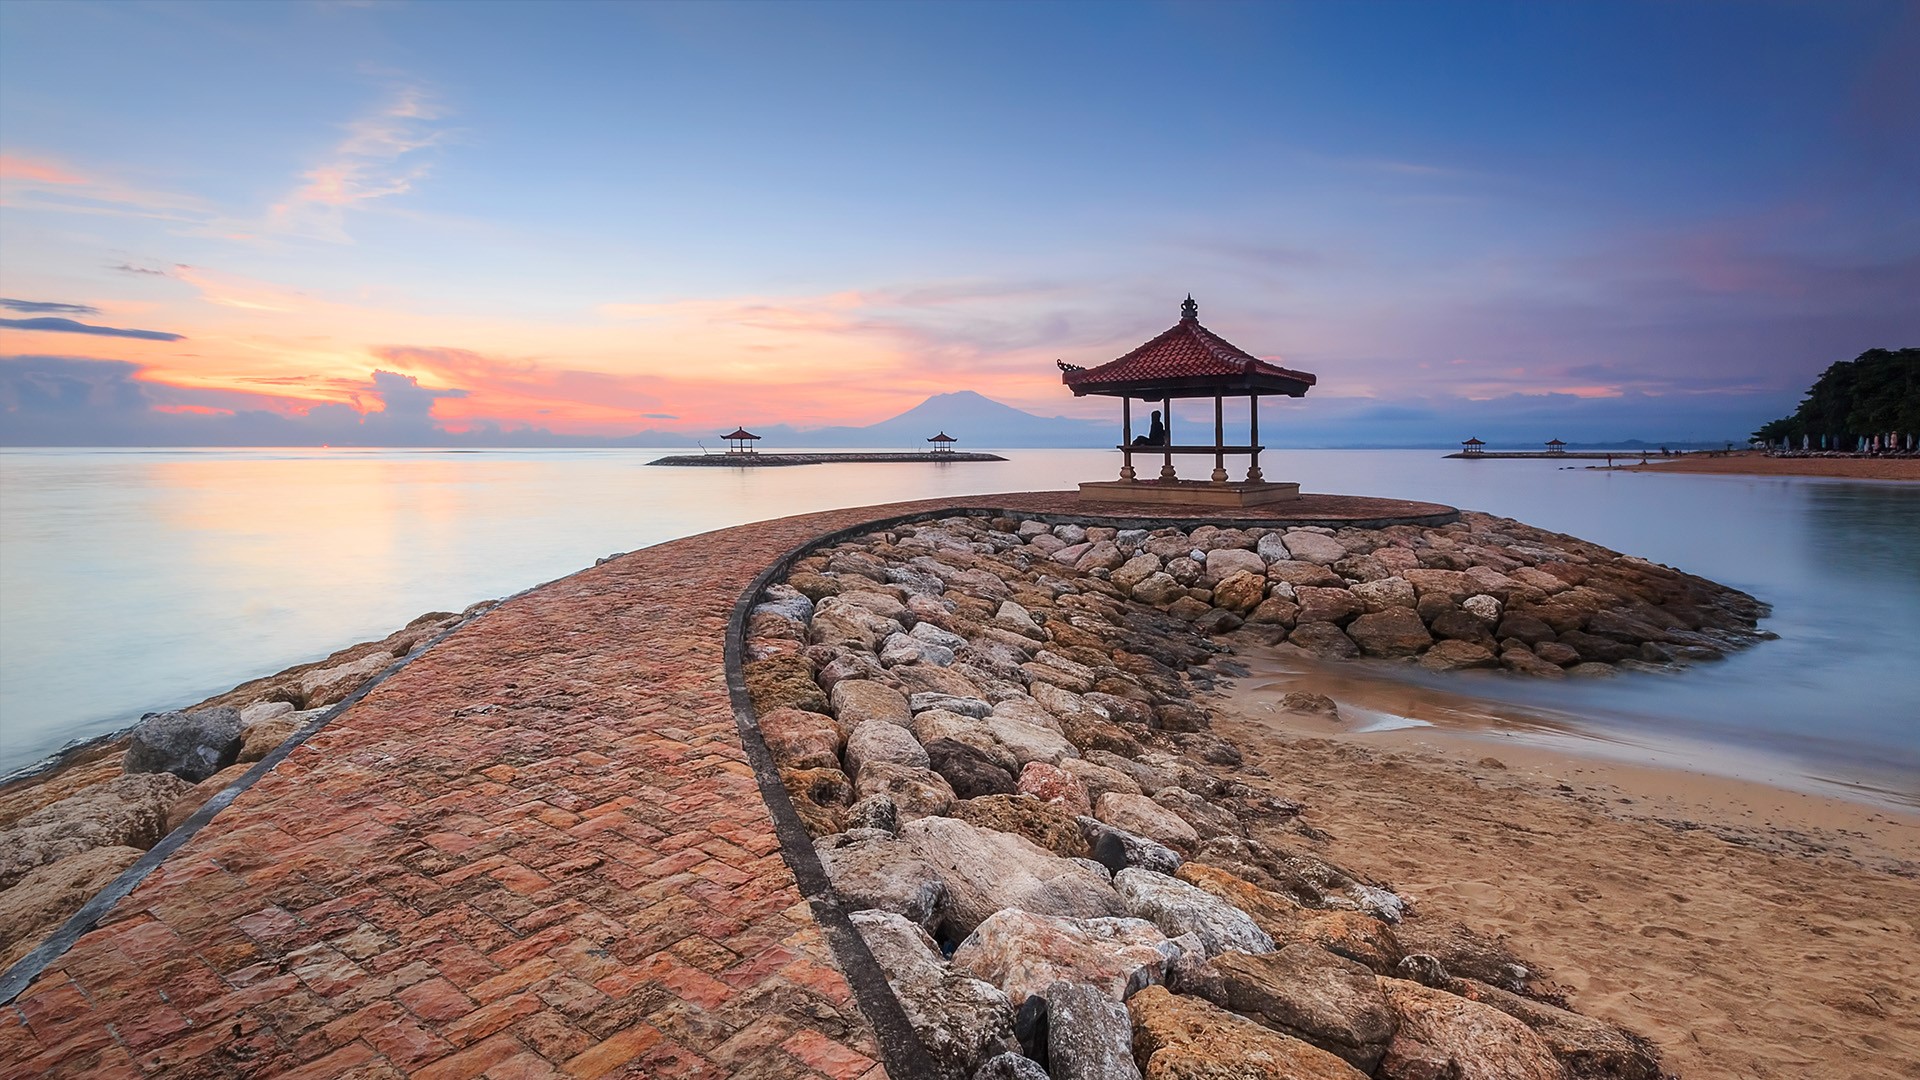 Karang Beach, Sanur, Bali, Indonesia | Windows 10 Spotlight Images